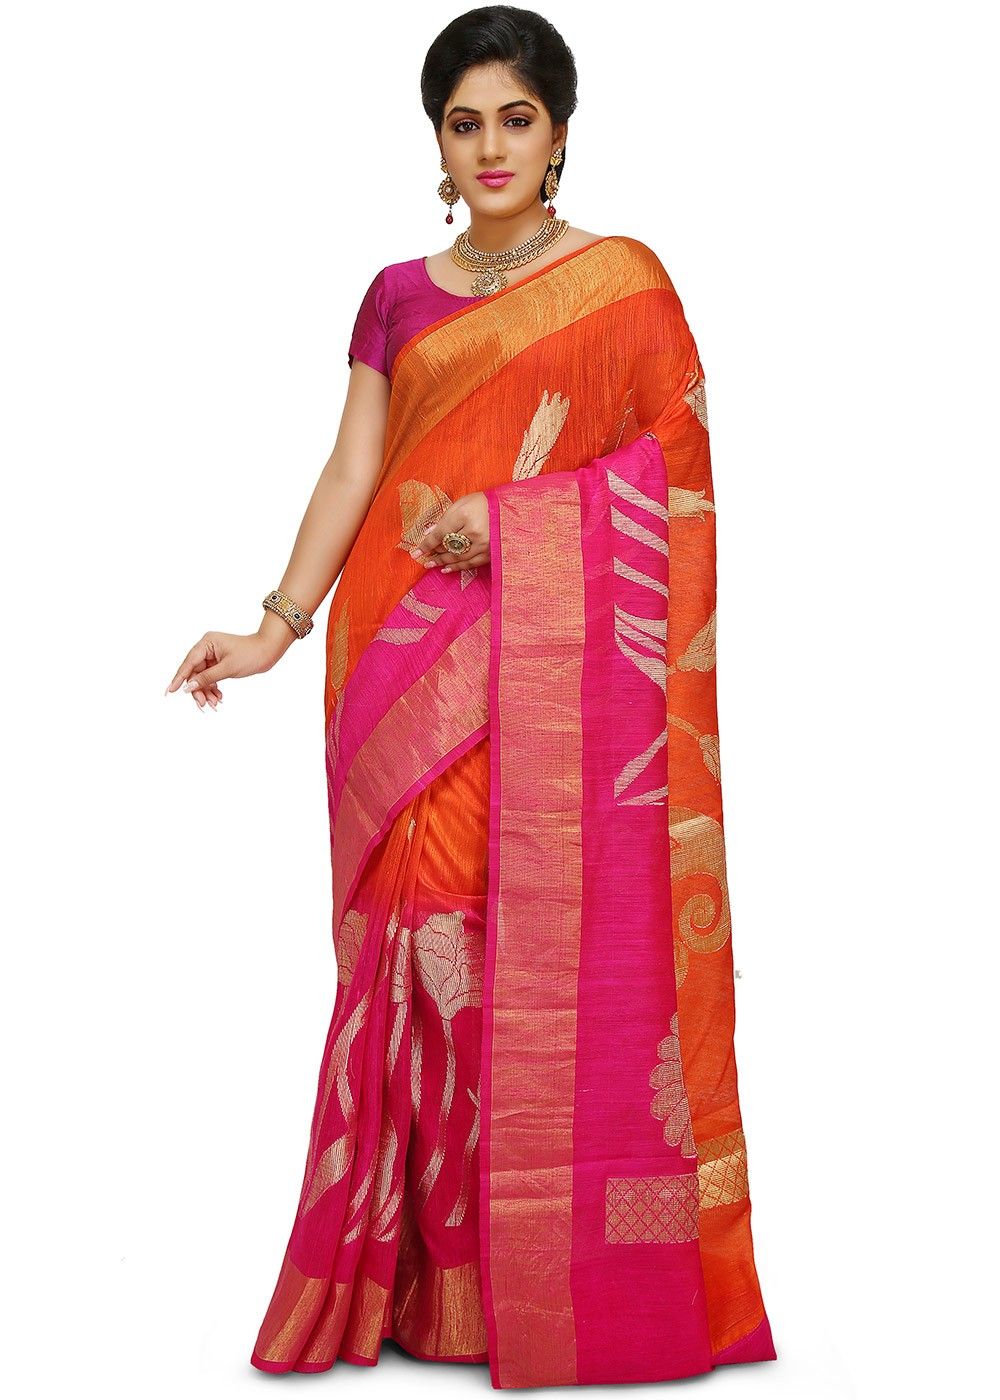 Women's Stunning Patola Silk Saree (Pink) GG000049 - www.gograbo.com